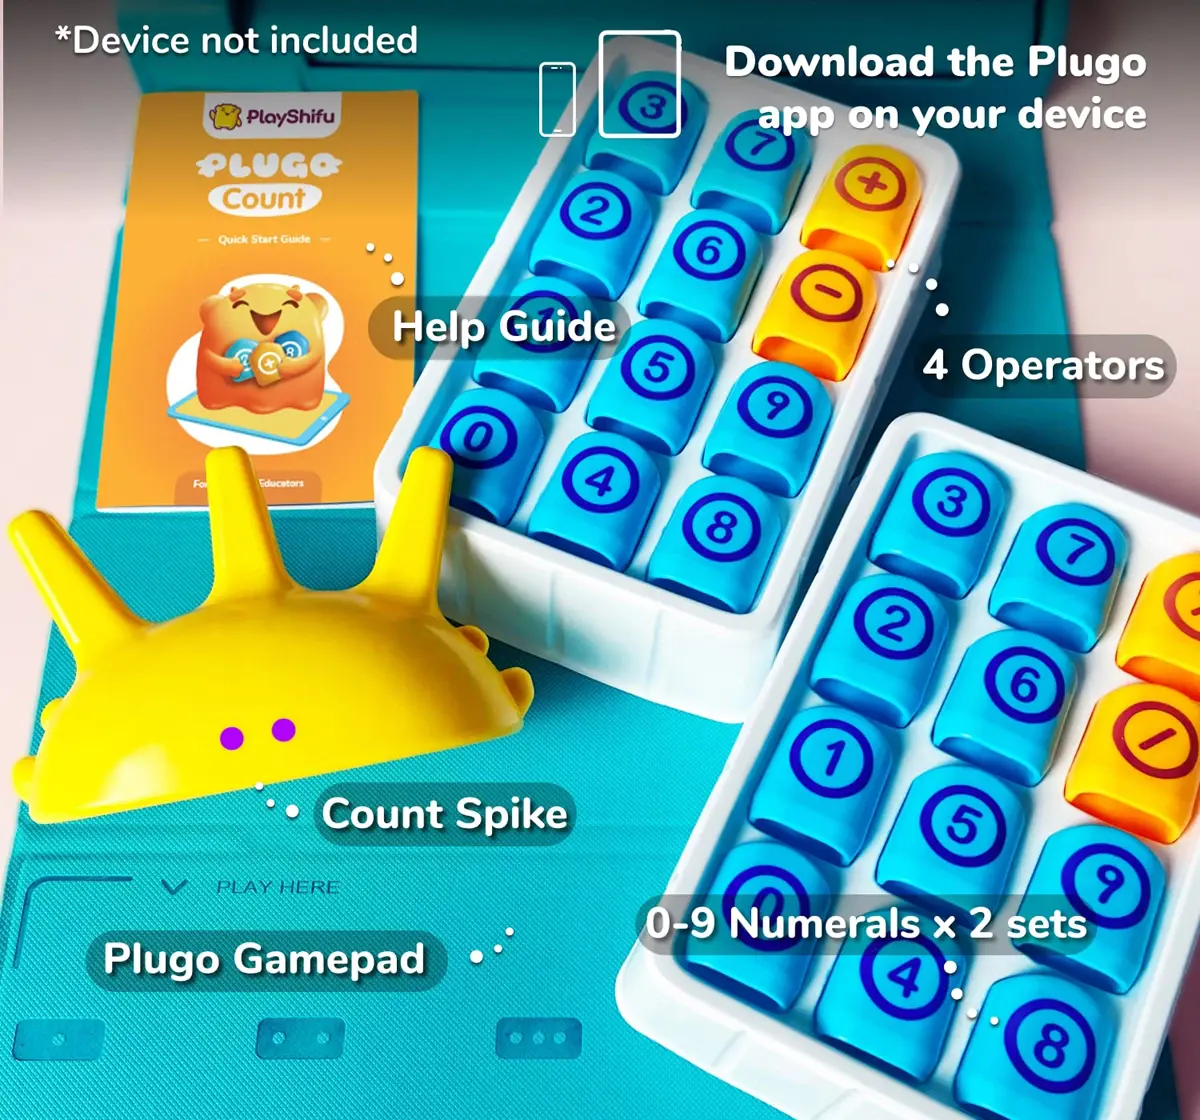 Playshifu Shifu Plugo Count - Hands On Math Kit Games for Kids age 5Y+ 